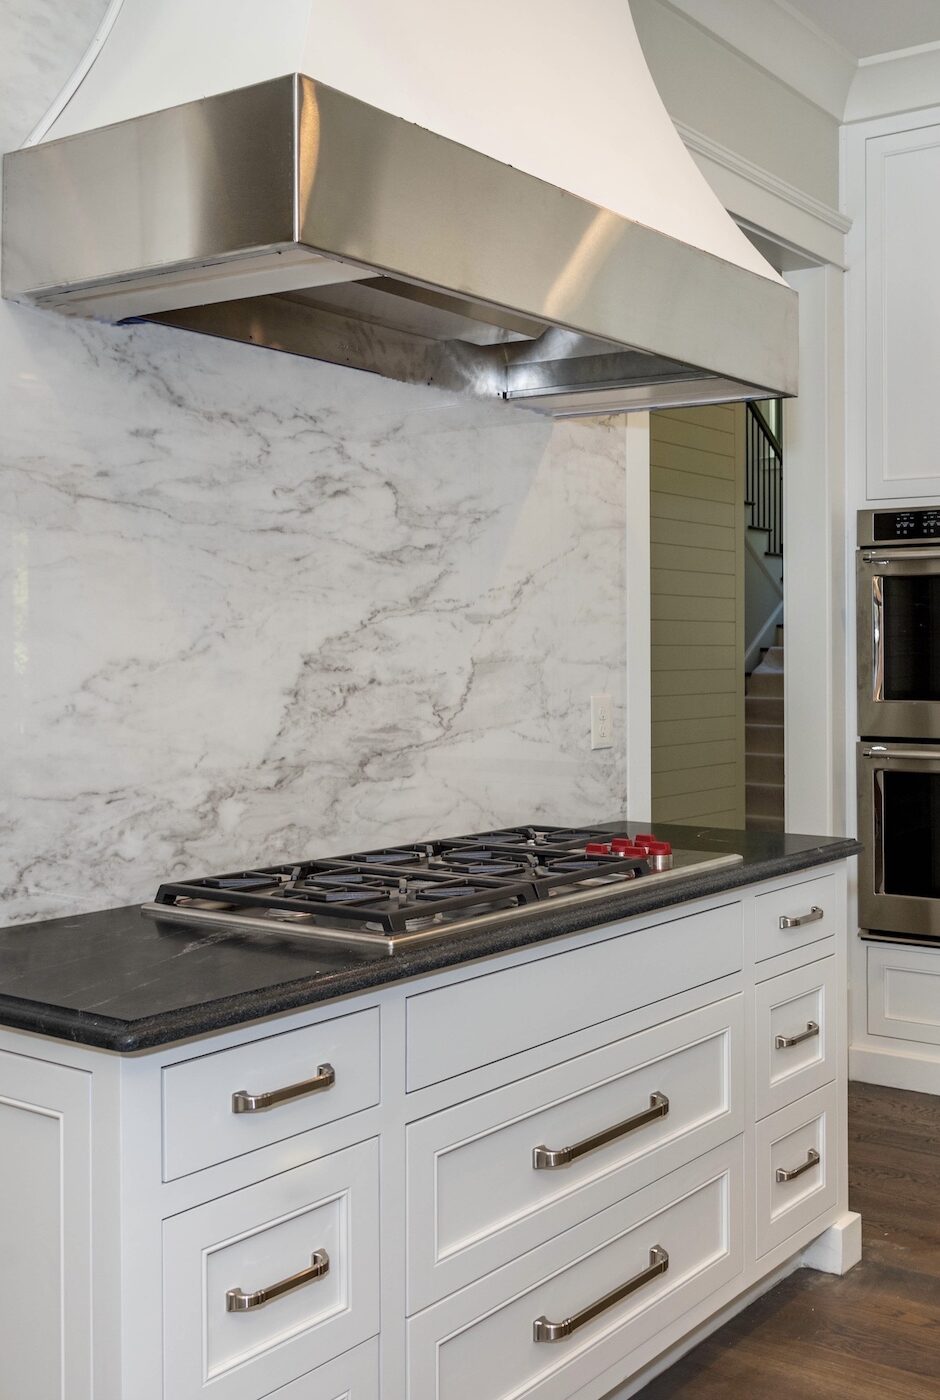 kitchen-oven-range-detail-white-cabinetry-marble-backsplash